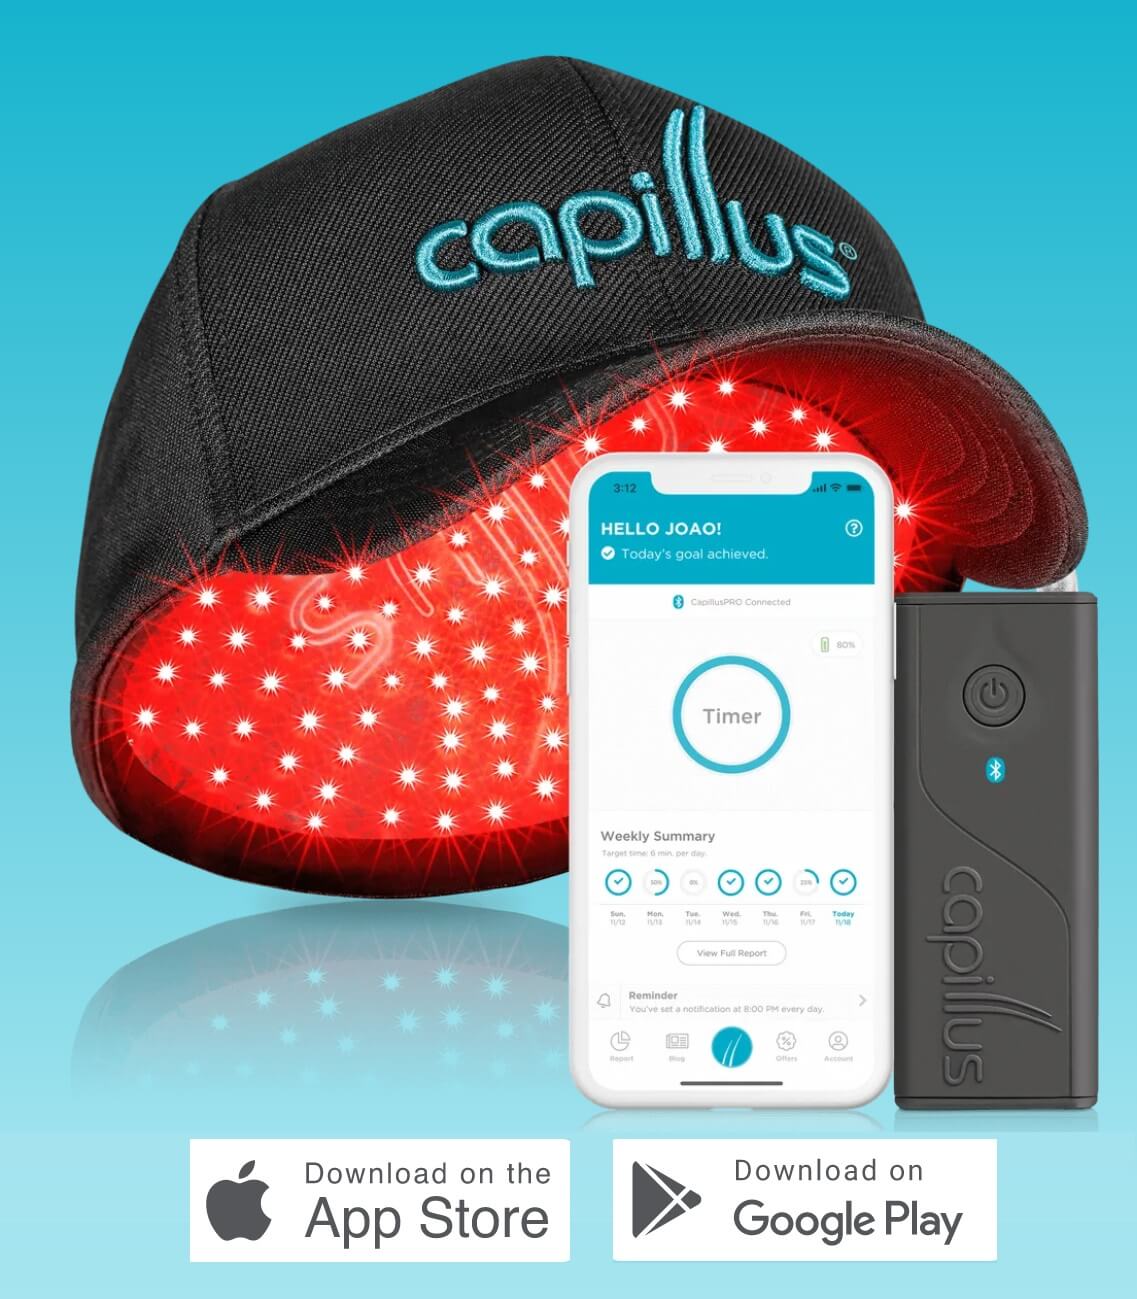 Capillus Pro S1 304 アプリ対応モデル